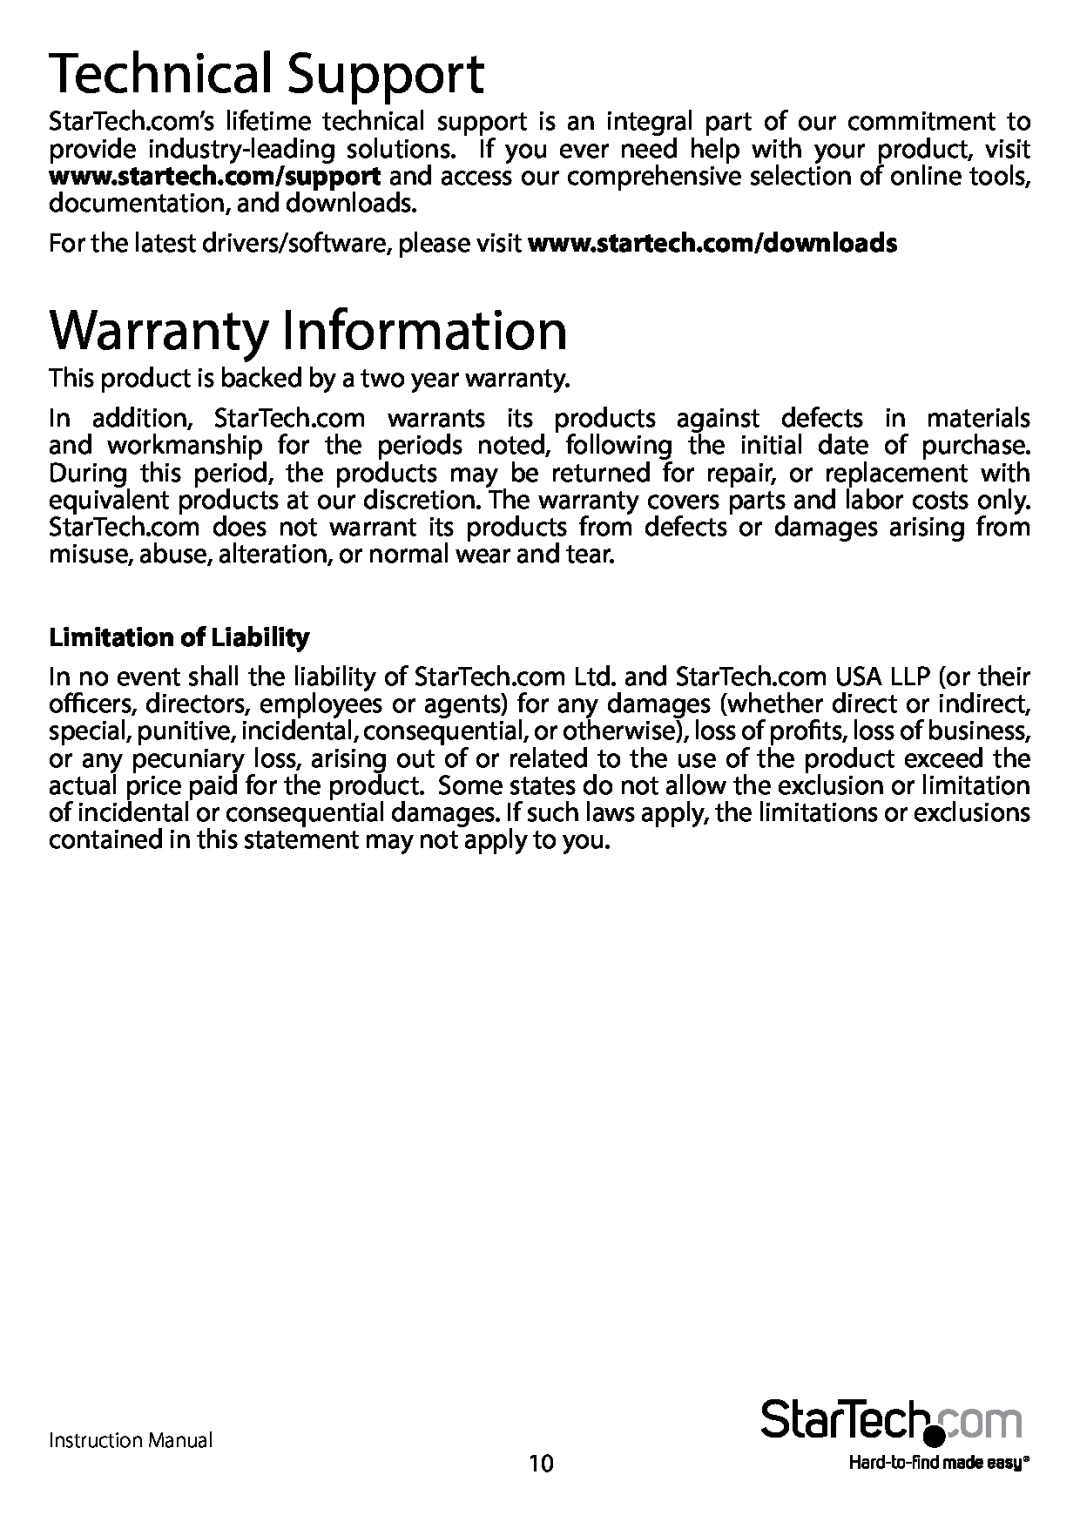 StarTech.com SATDUP13 manual Technical Support, Warranty Information, Limitation of Liability 